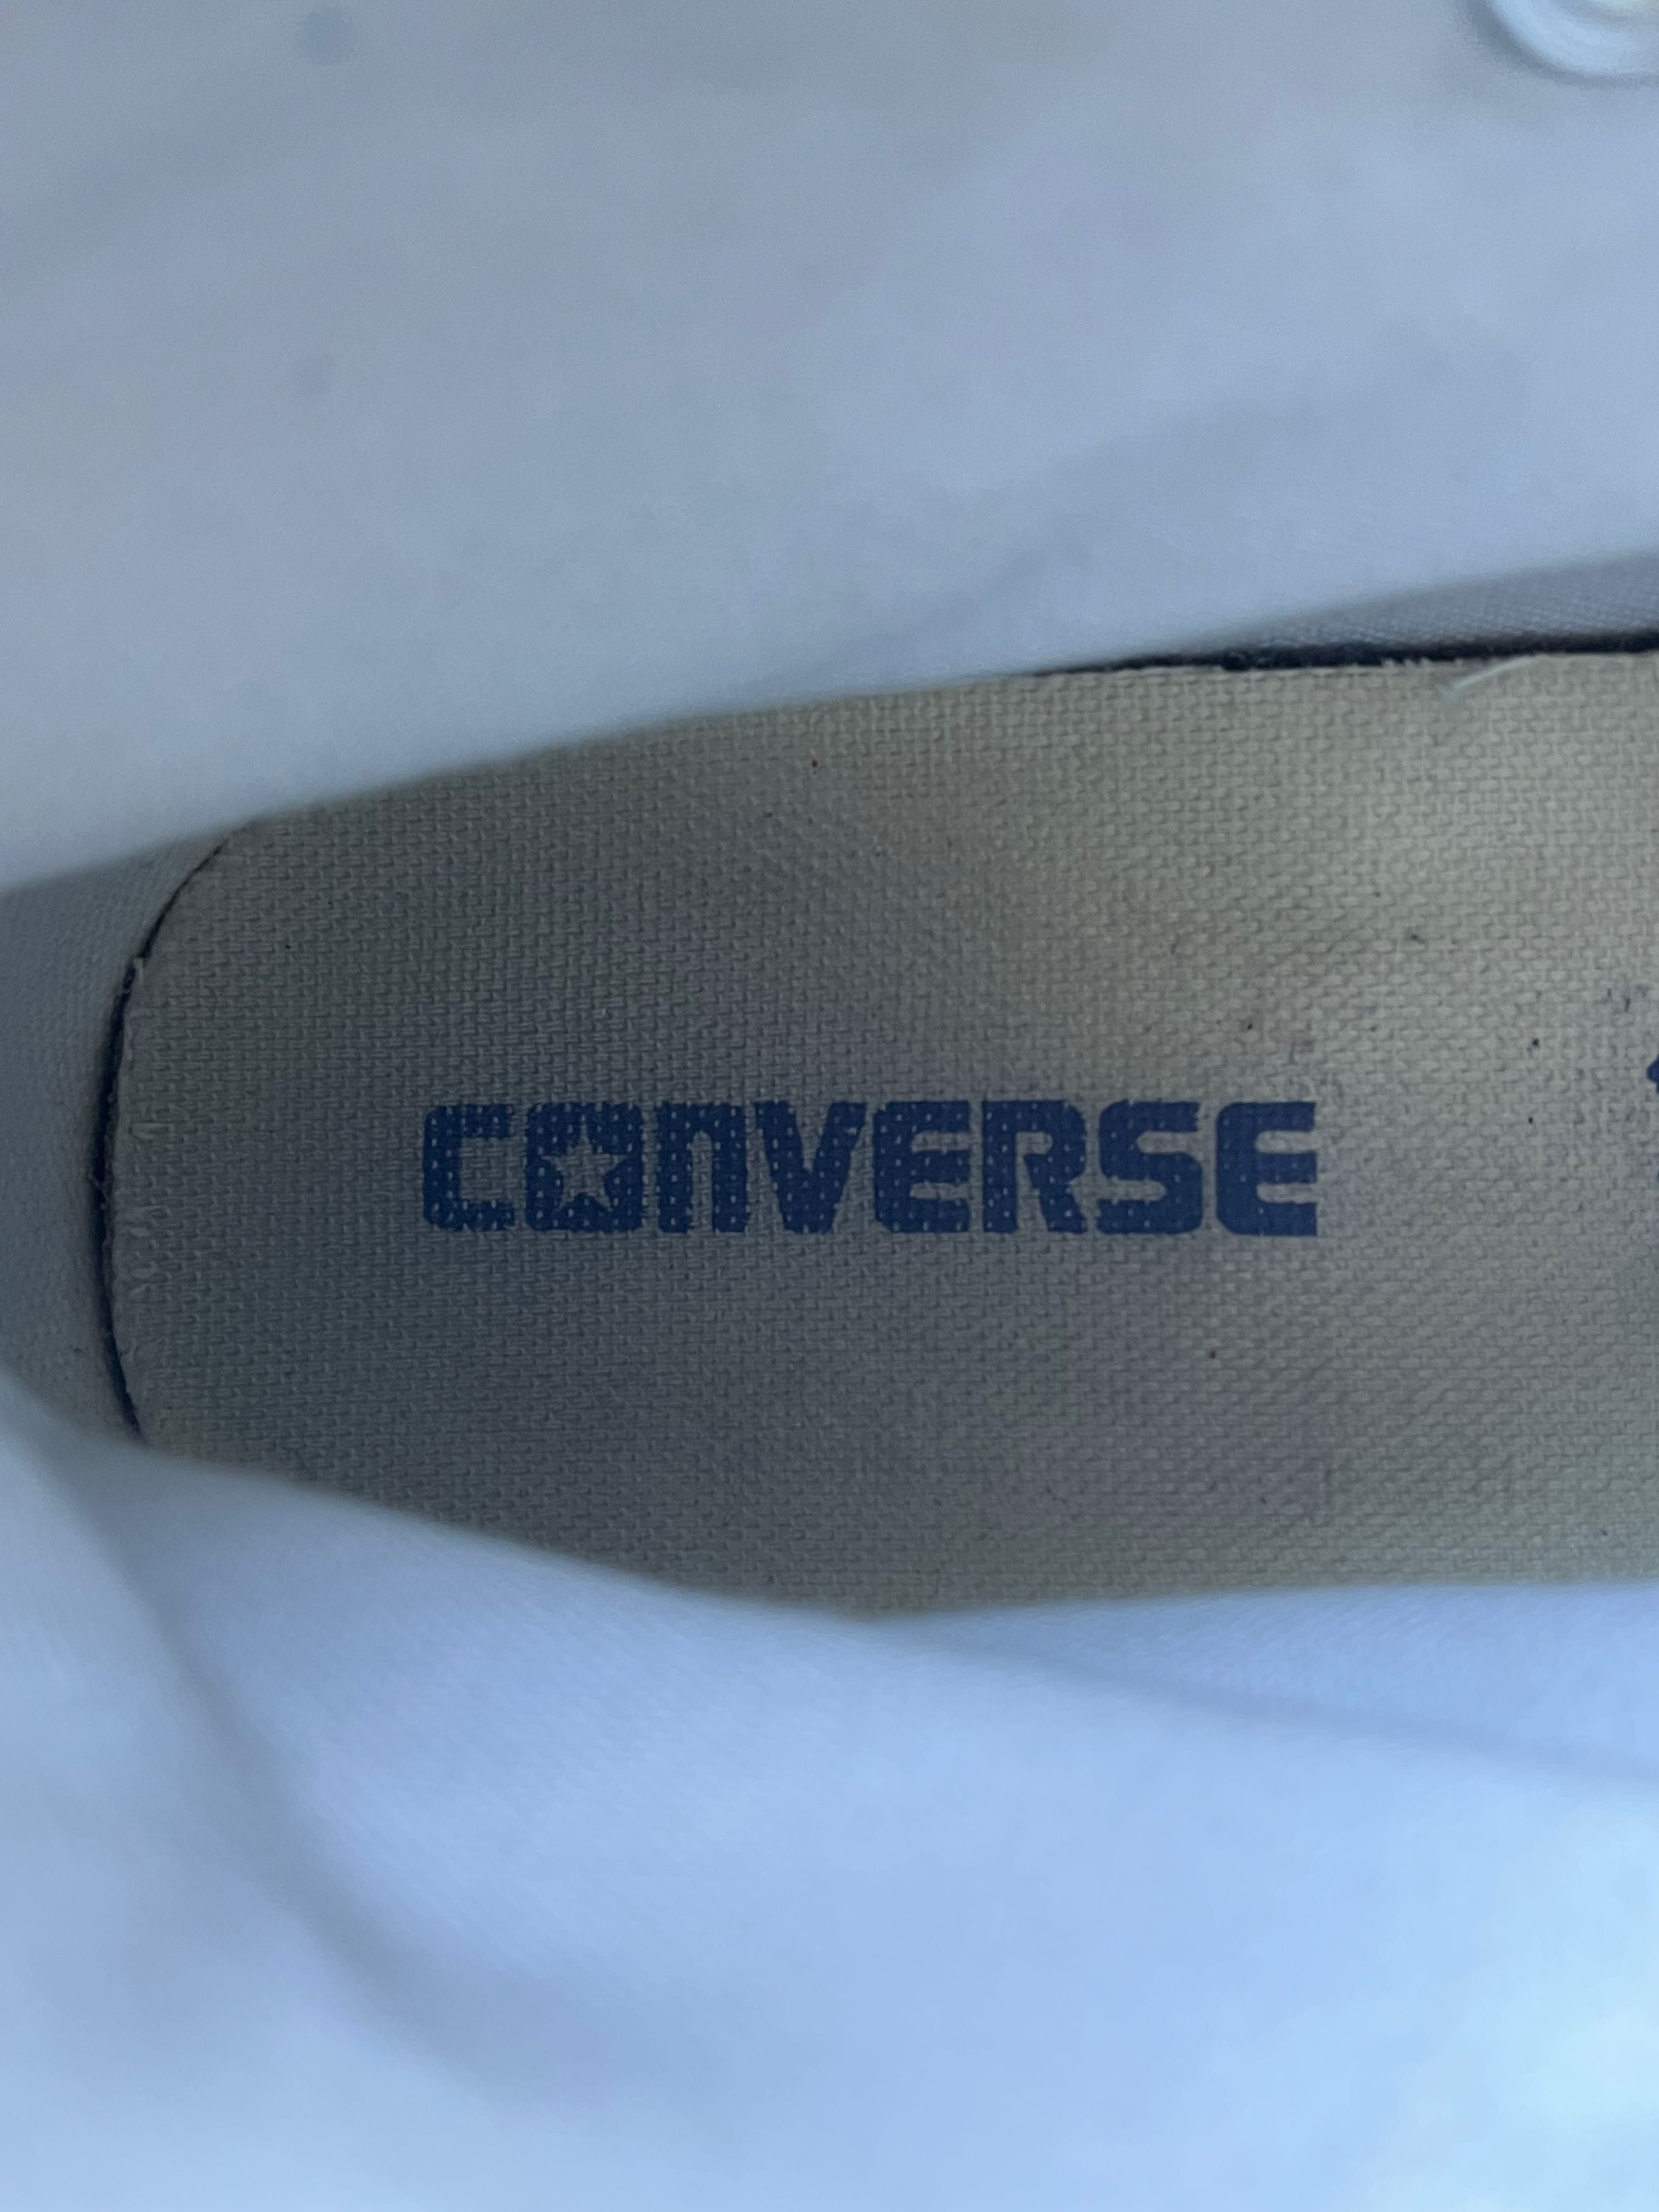 Converse Chuck 70 fioletowe 38 r, 24.5 cm